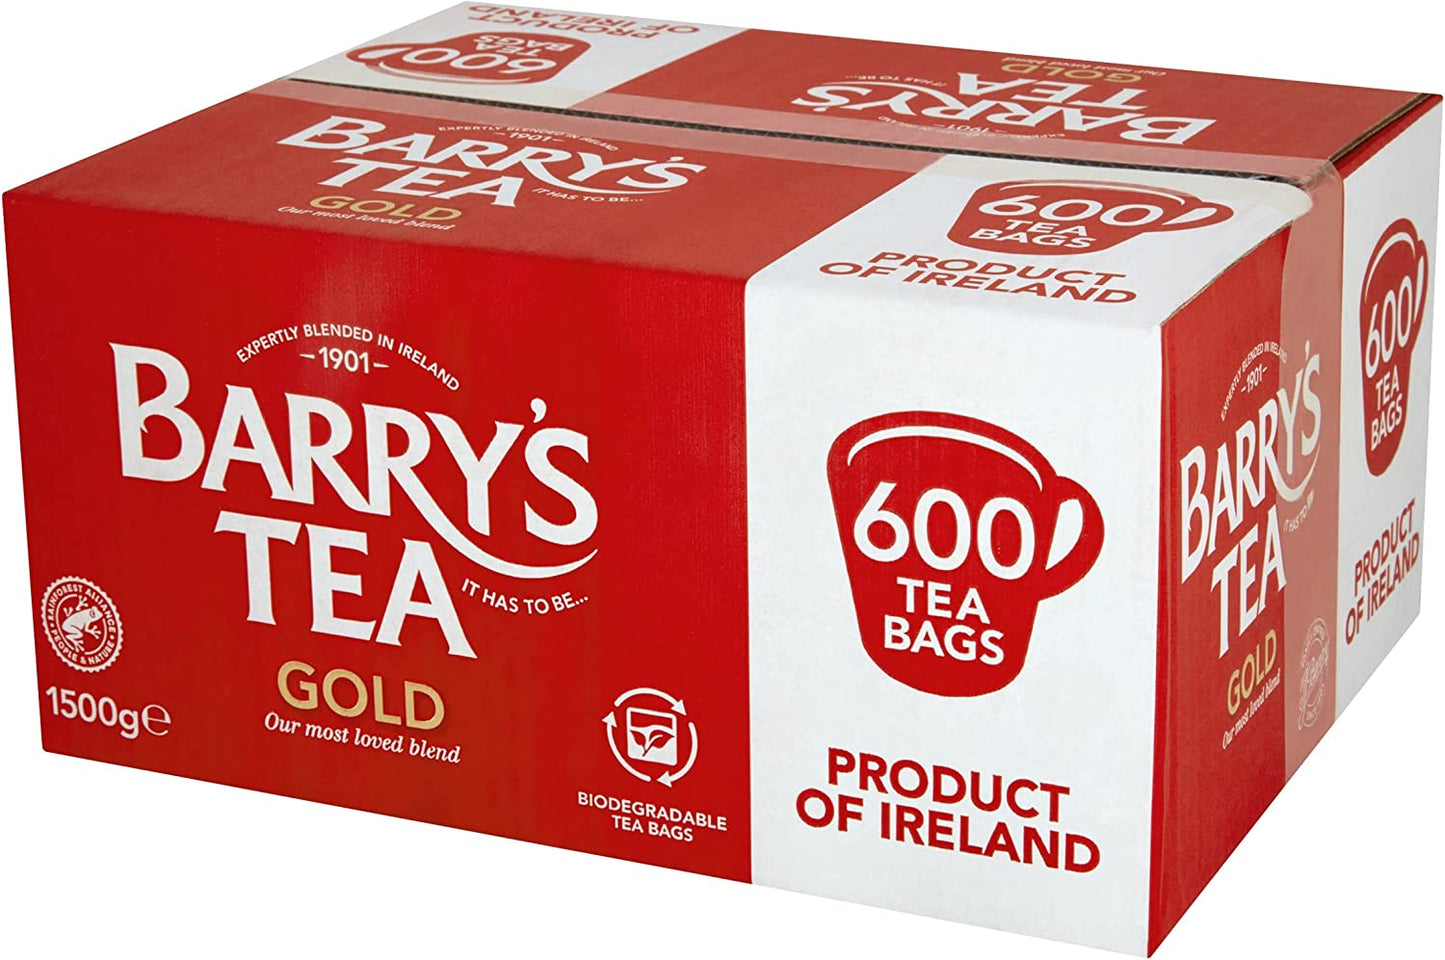 Barry's Gold Blend Tea 600's (Red Box)